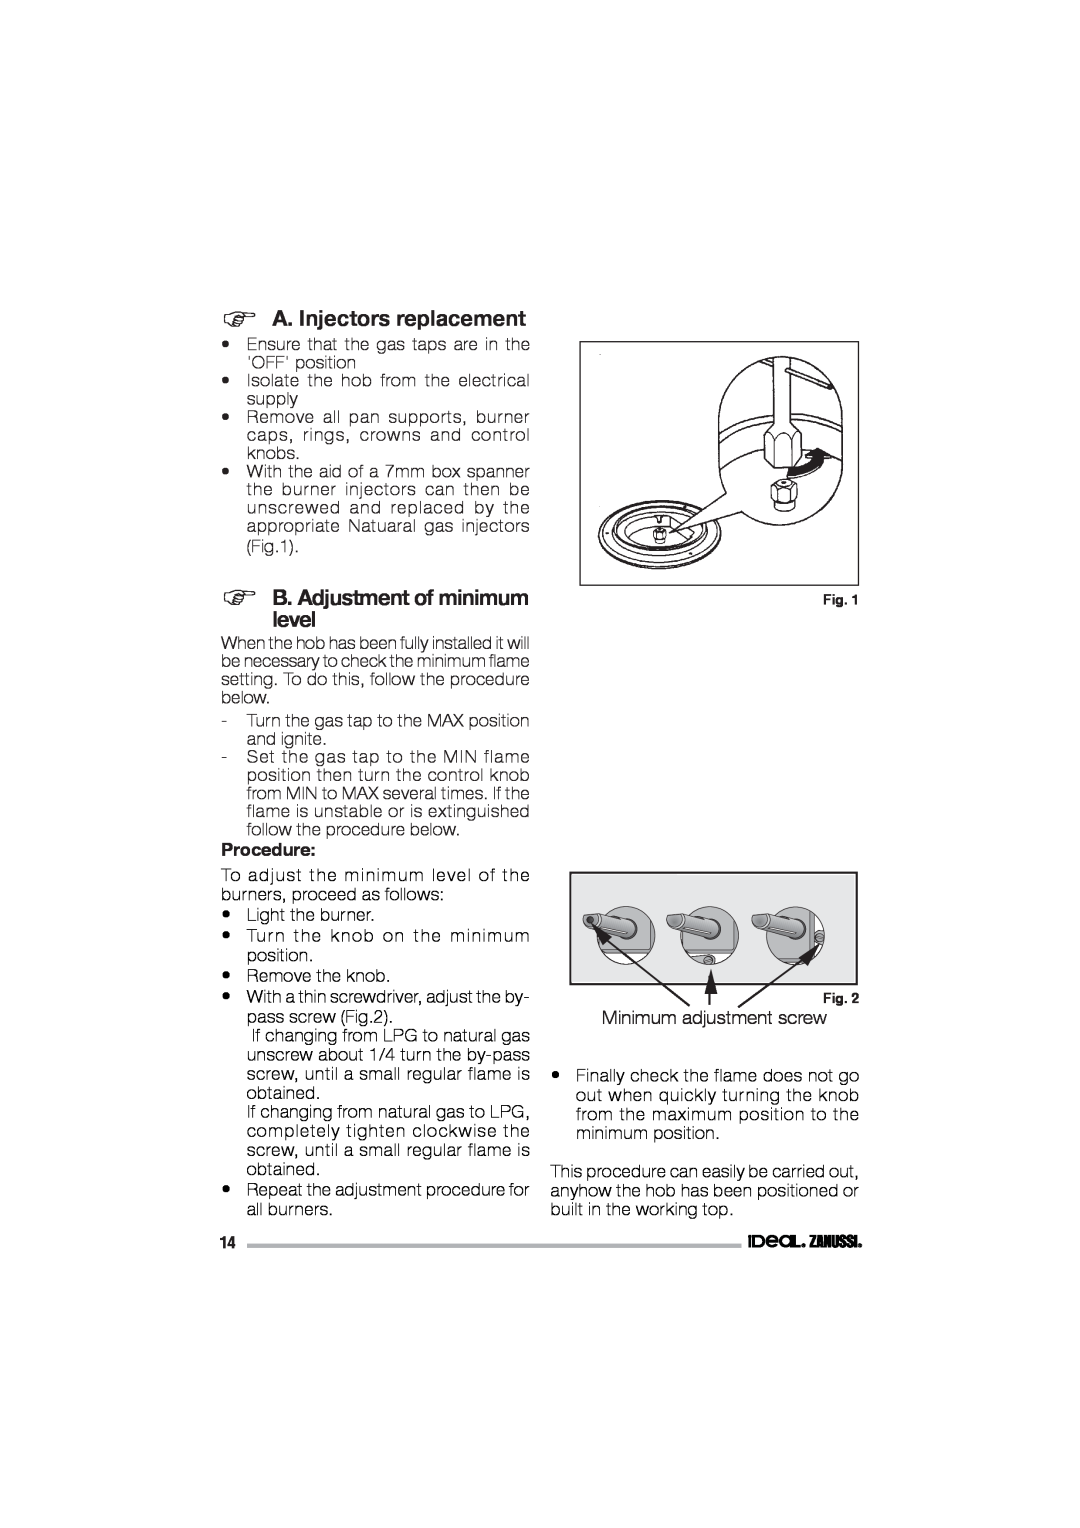 IDEAL INDUSTRIES IZGS 68 ICTX manual  A. Injectors replacement, Minimum adjustment screw 